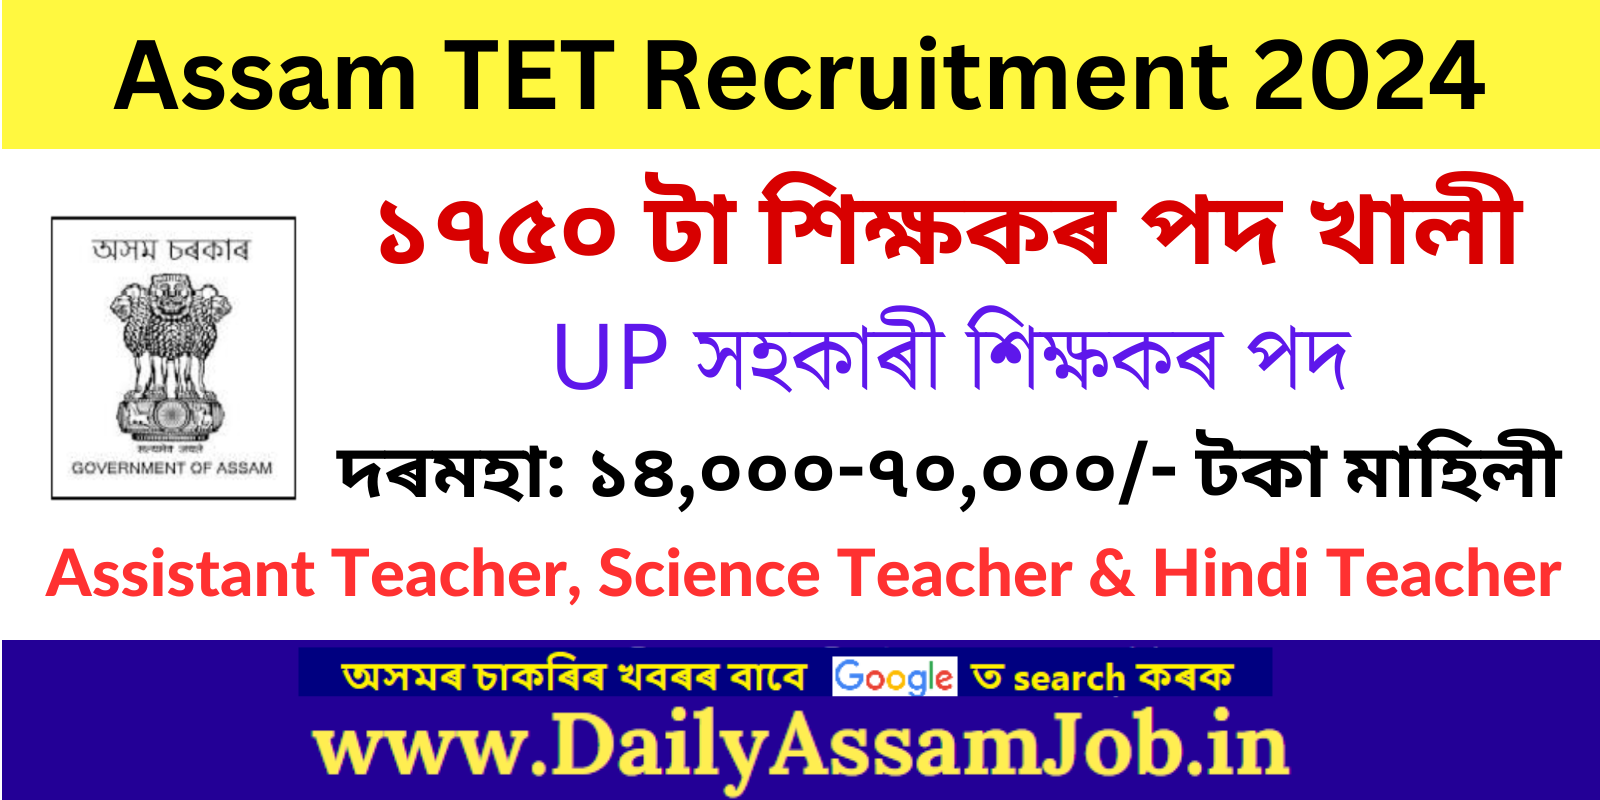 Assam TET Recruitment 2024 for 1750 DEE Upper Primary Teacher Vacancy